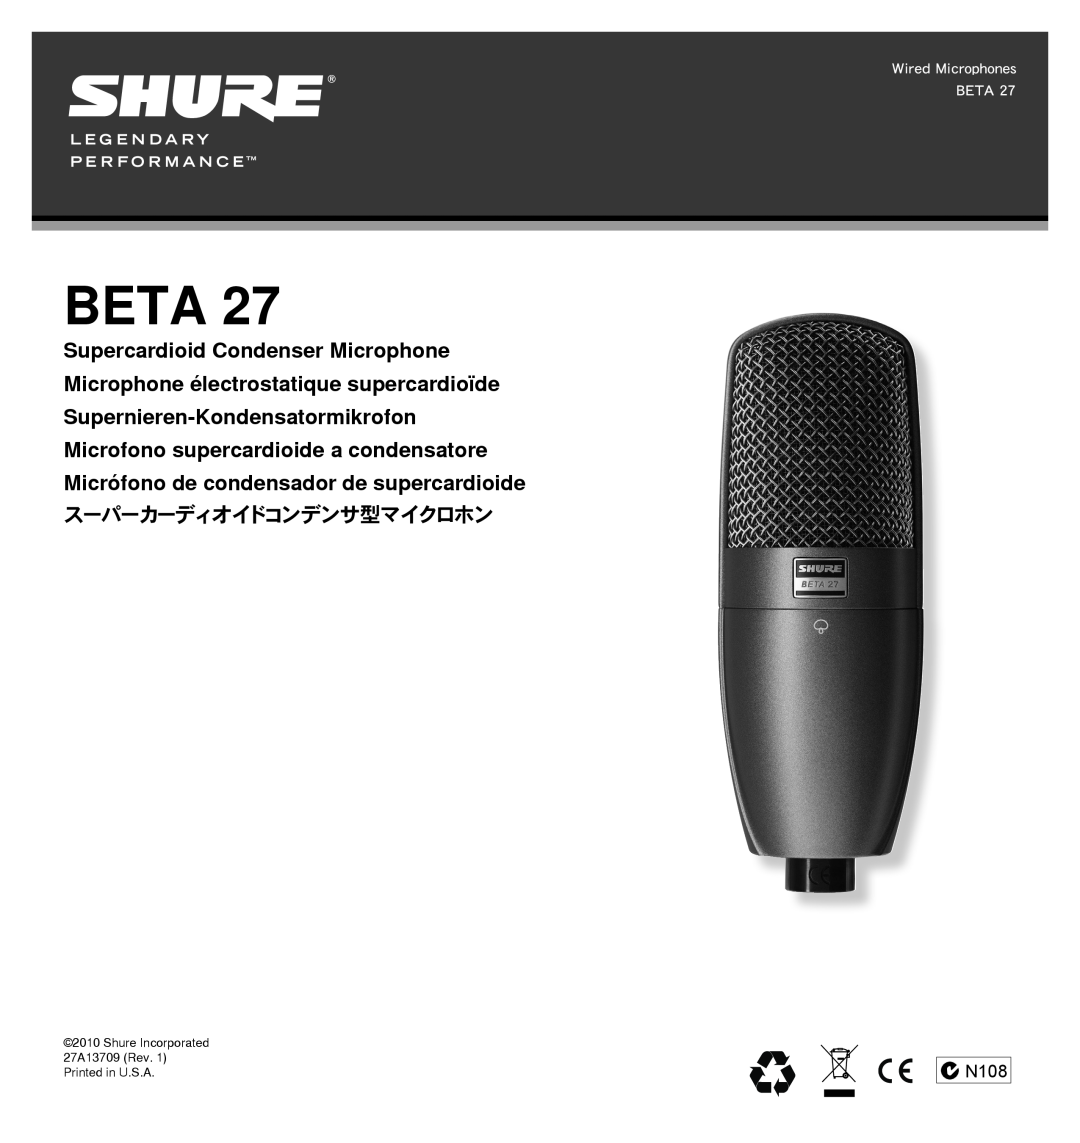 Shure 27A13709 manual Beta, スーパーカーディオイドコンデンサ型マイクロホン, N108, Wired Microphones BETA 